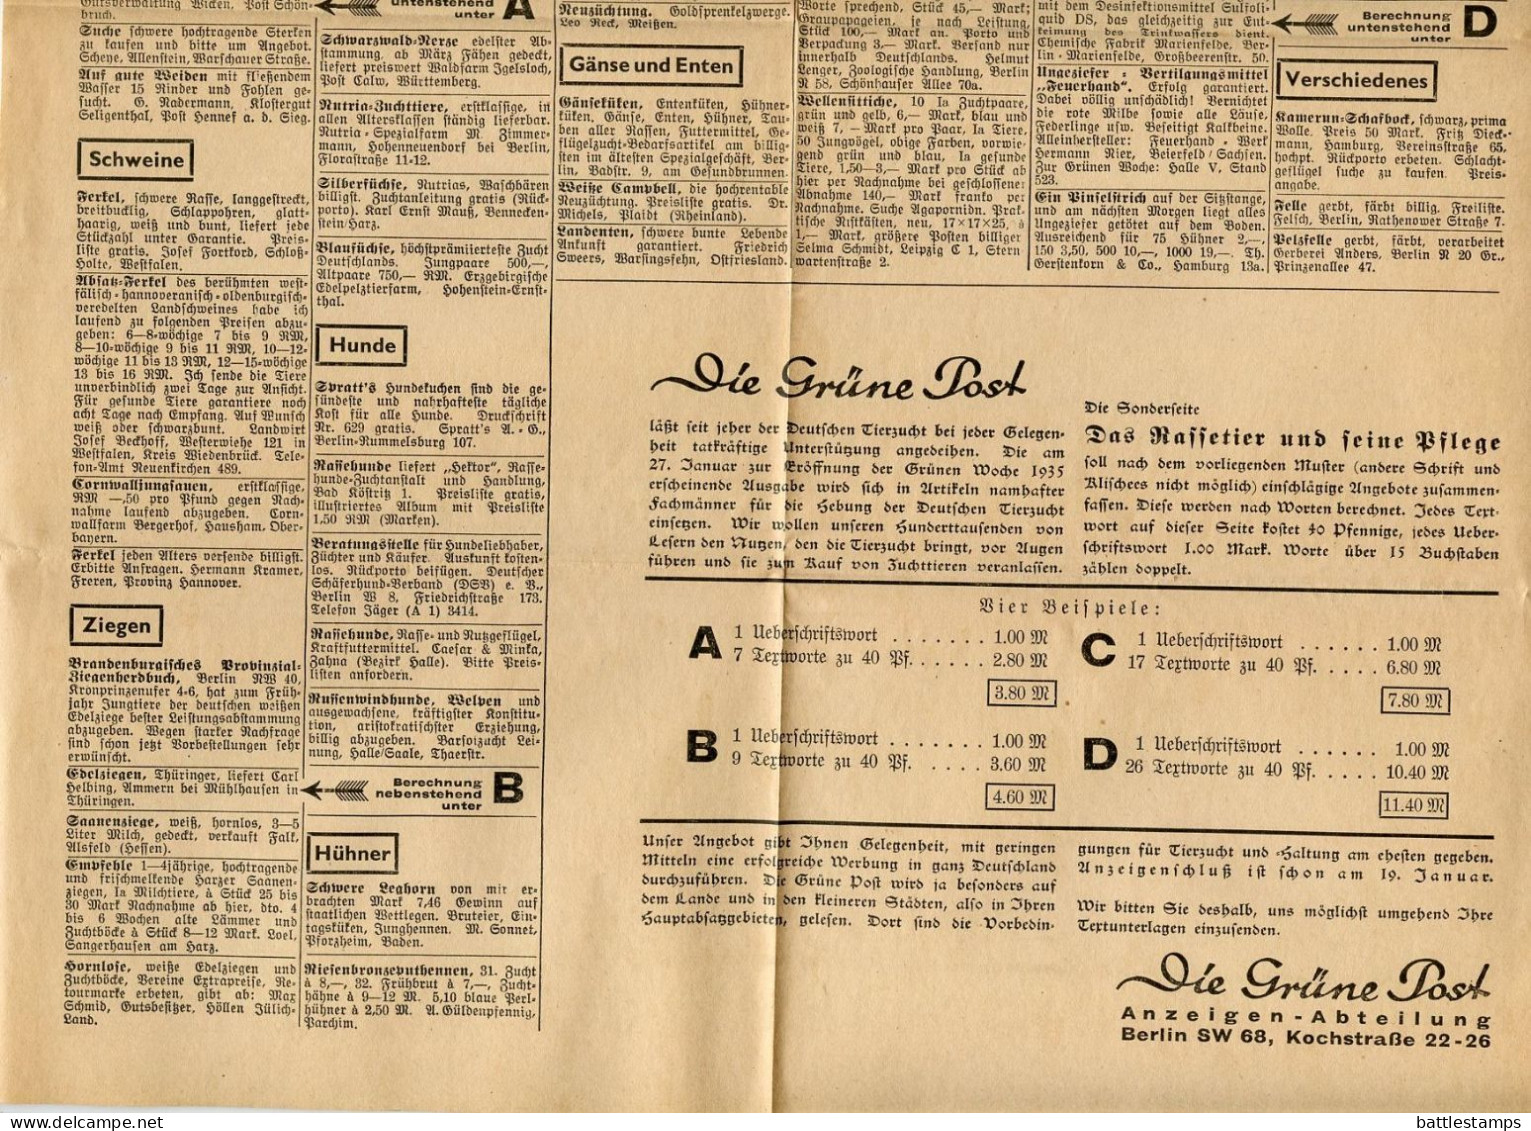 Germany 1935 Cover W/ Letter & Advertisements; Berlin - Die Grüne Post (The Green Post - German Newspaper); 3pf. Meter - Máquinas Franqueo (EMA)